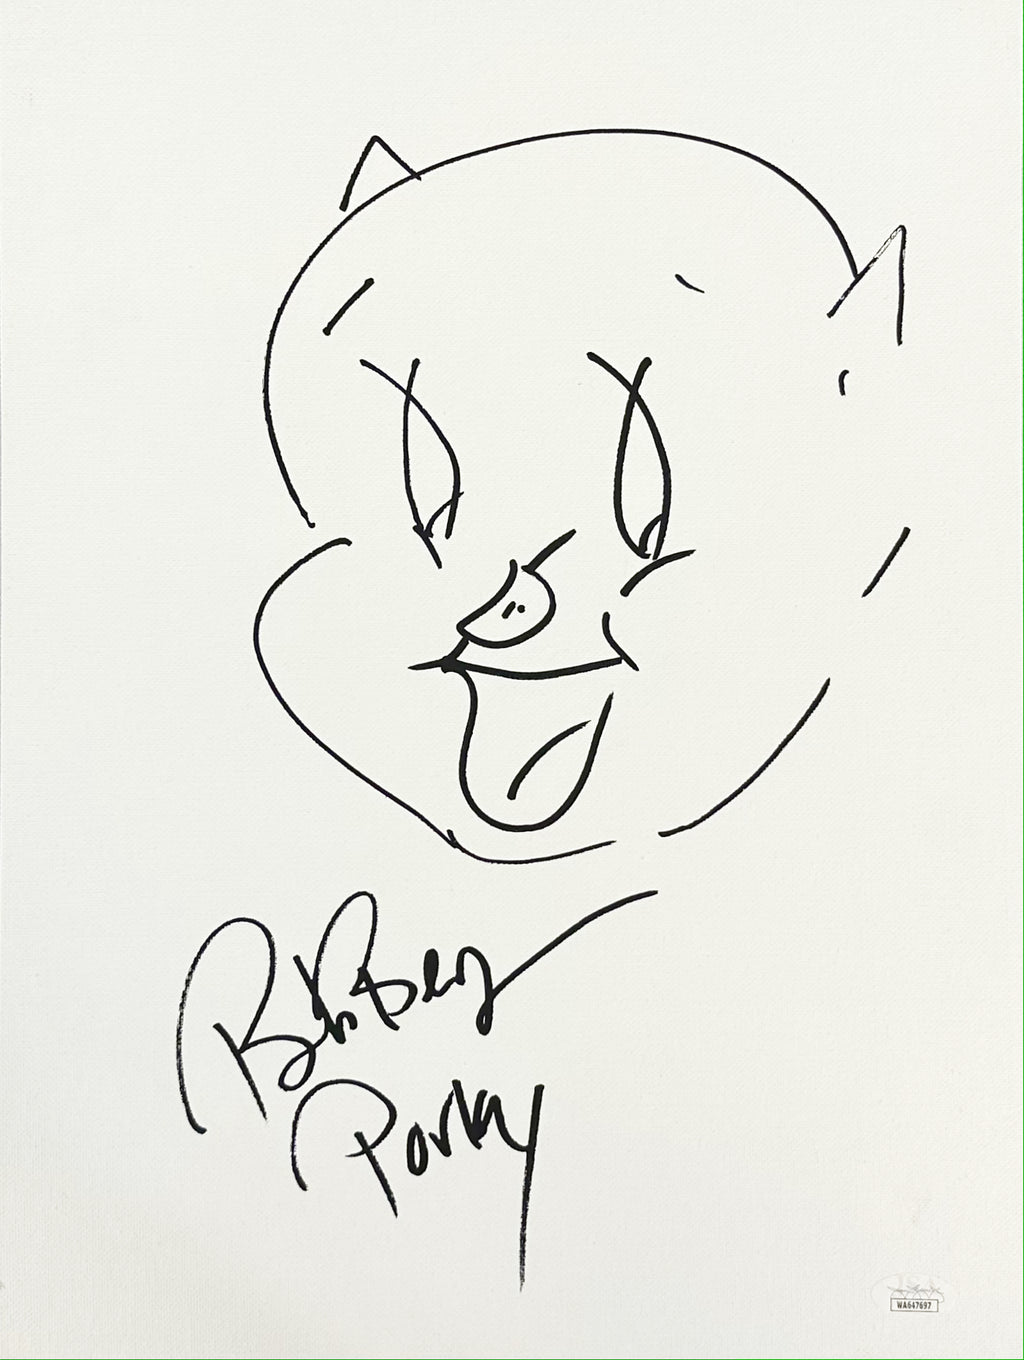 Bob Bergen autographed signed inscribed 12x16 canvas Looney Tunes JSA Porky